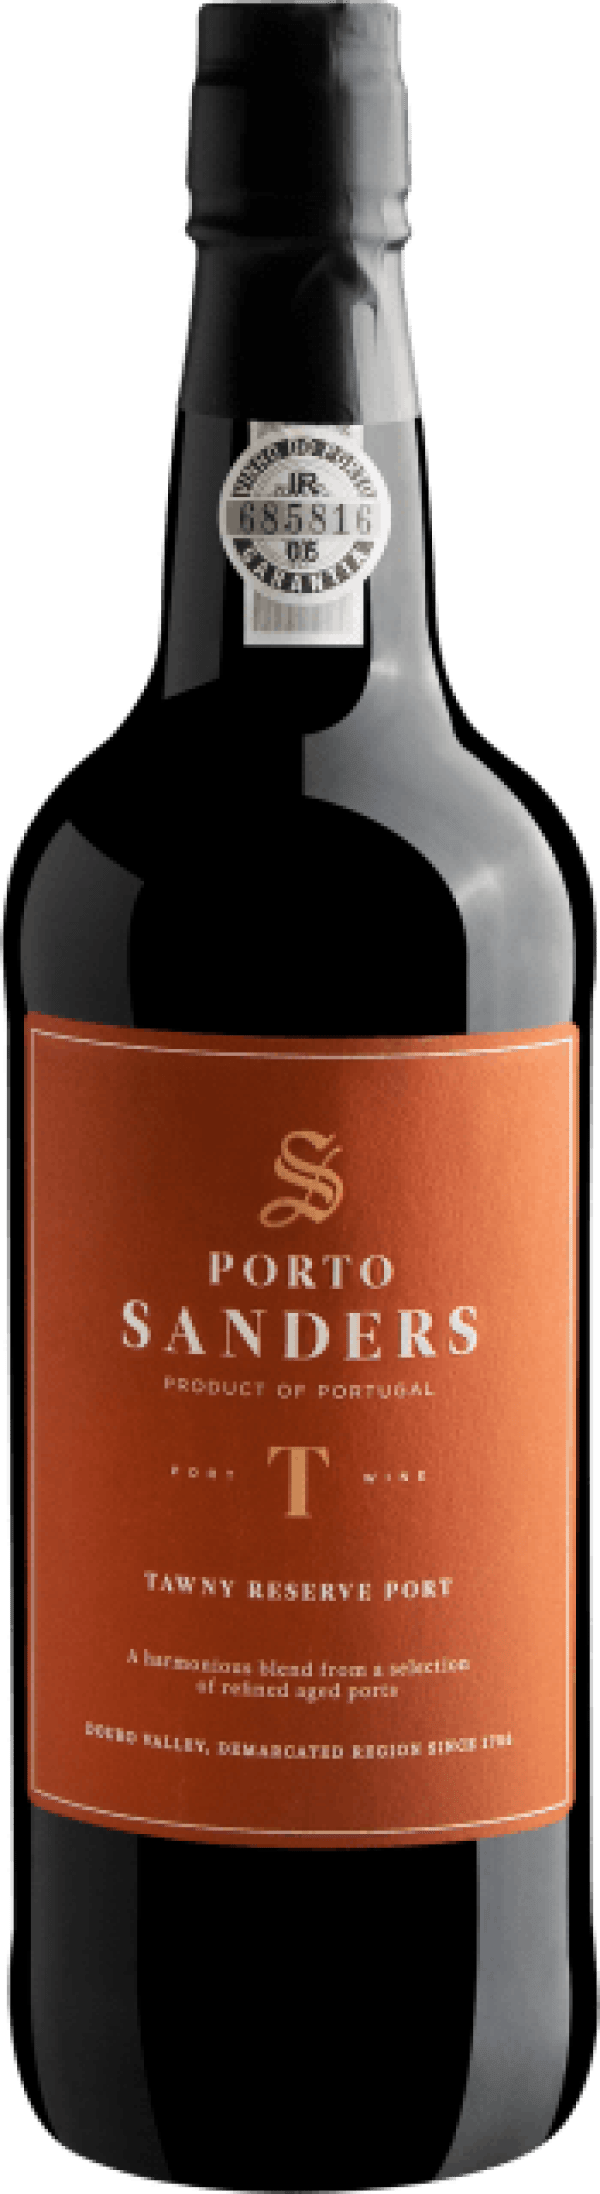 Sanders Vinho do Porto Tawny Reserva